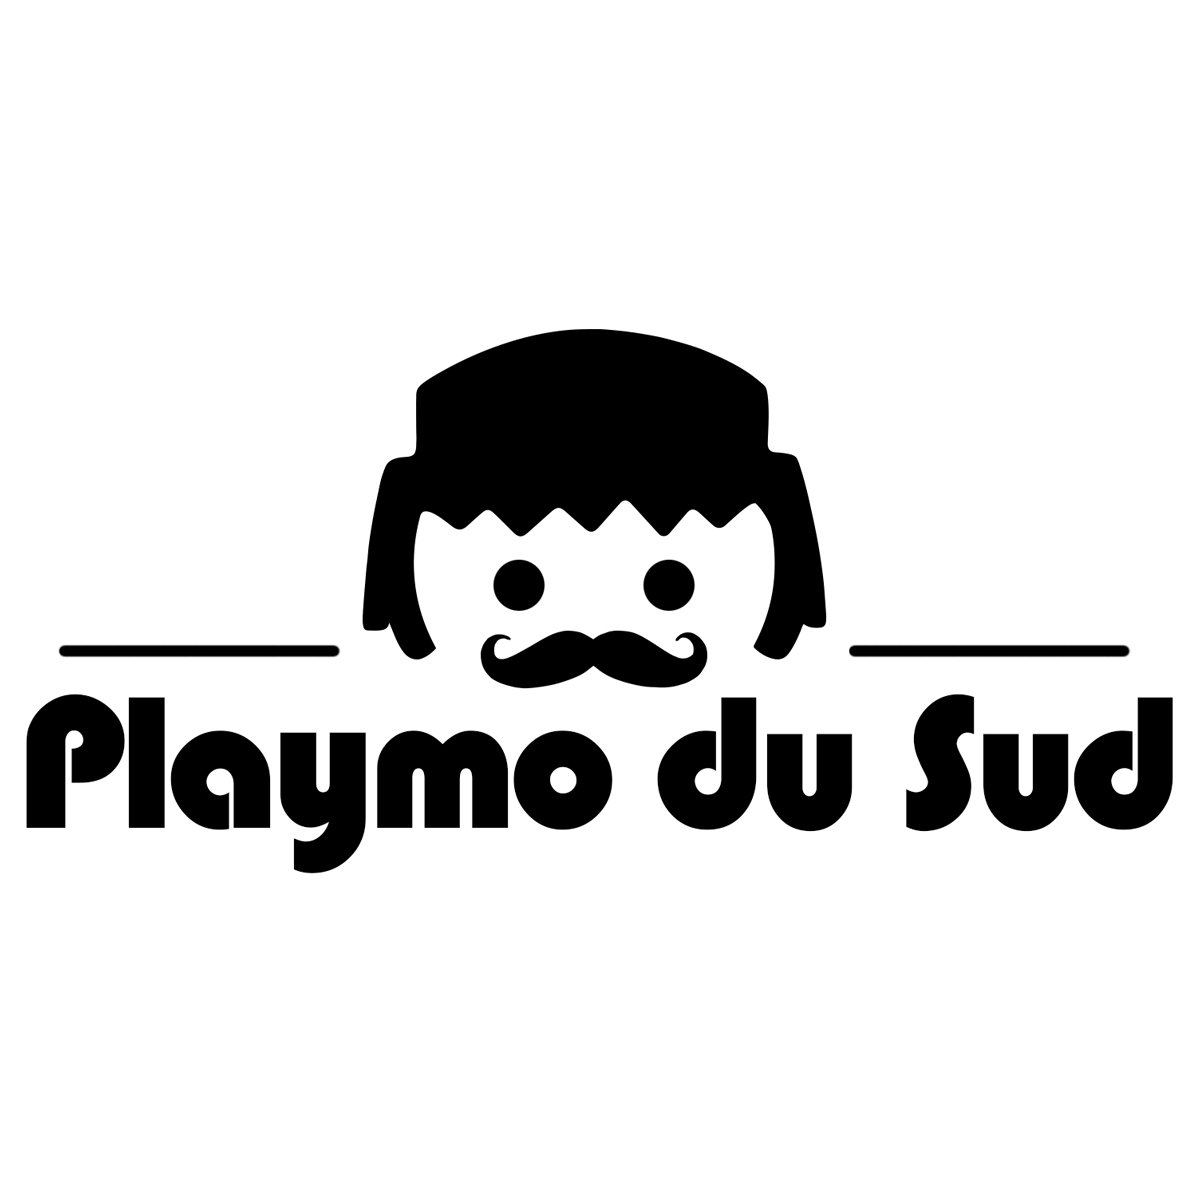 Association Playmobil Playmo du Sud